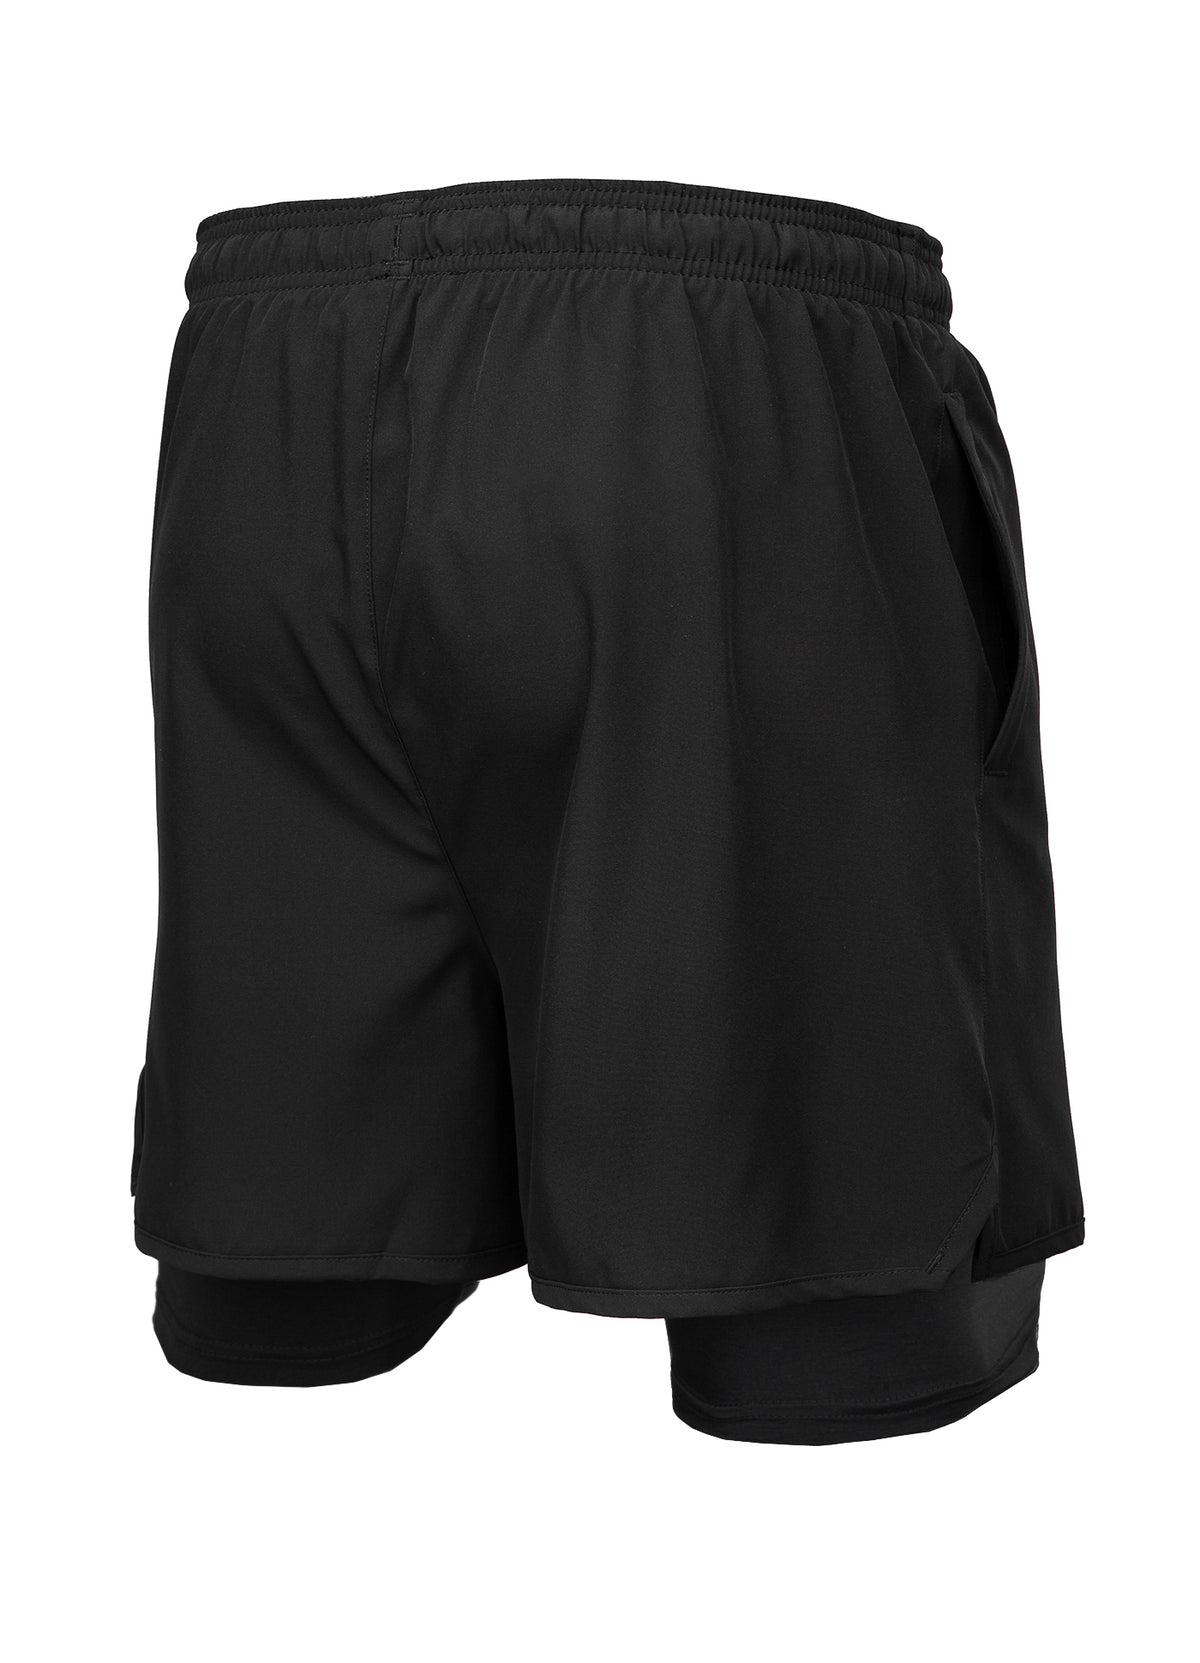 NEW LOGO Performance Black Shorts